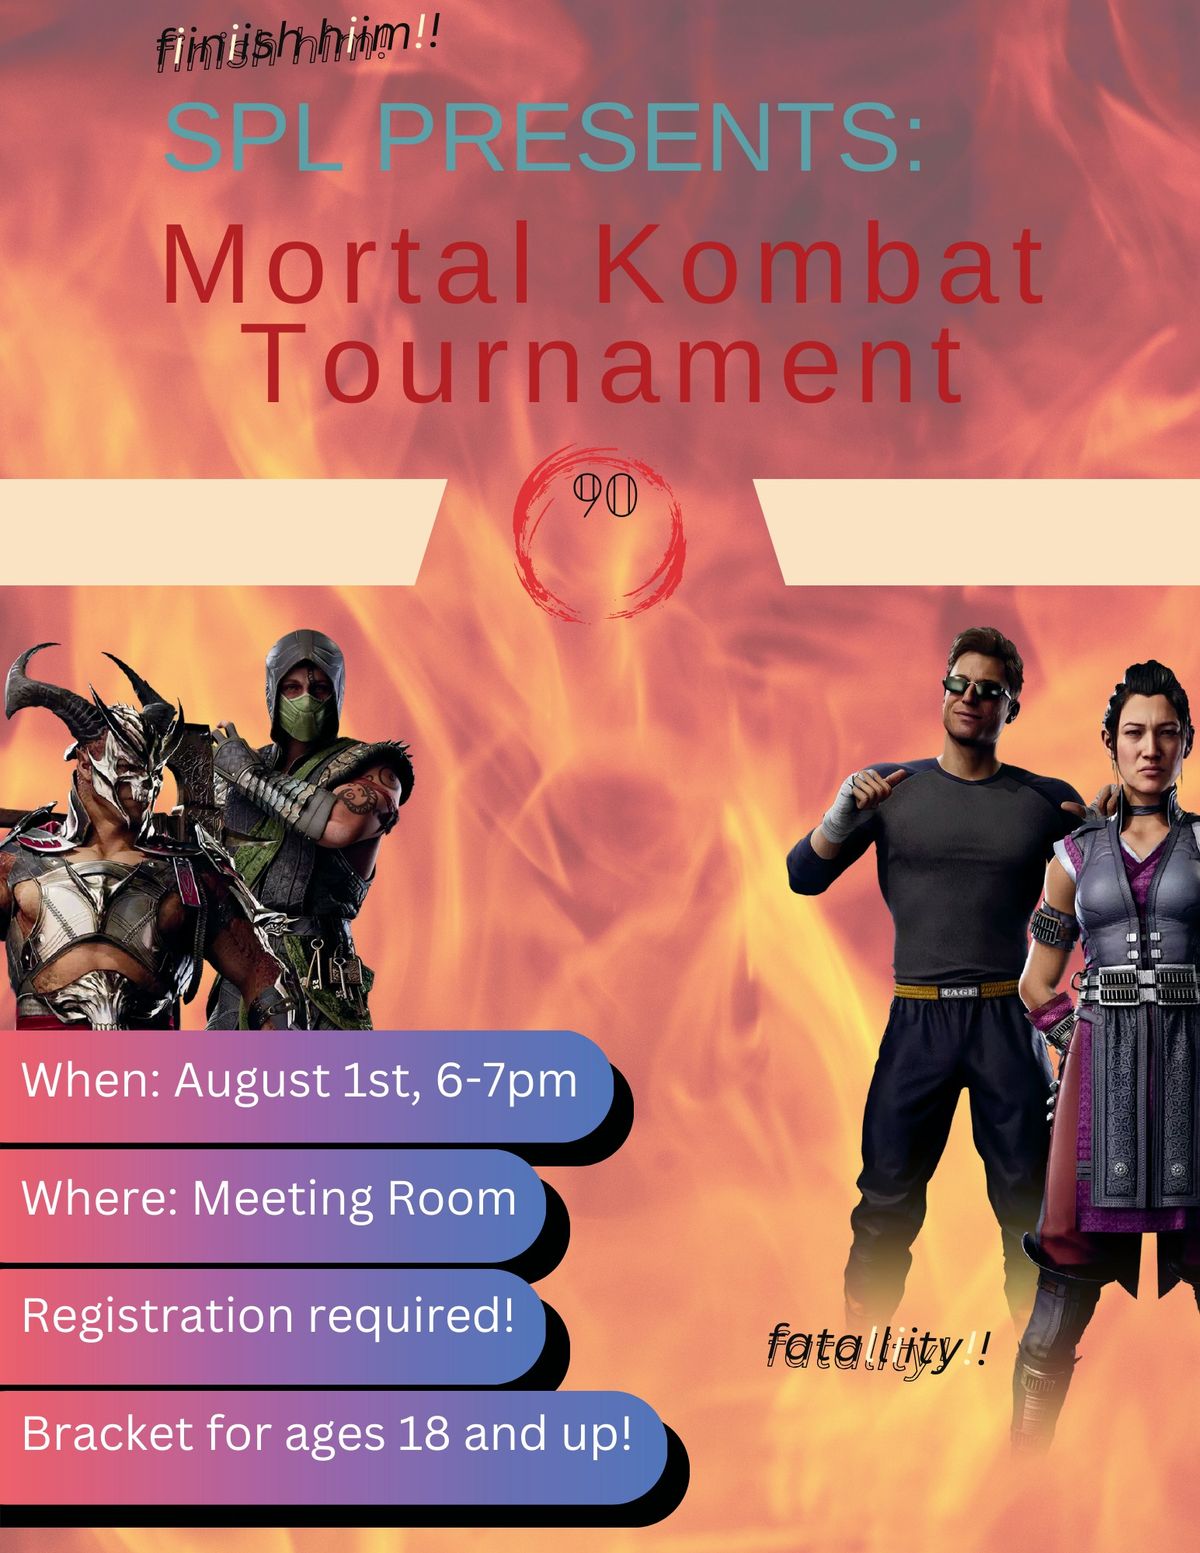 Mortal Kombat Tournament